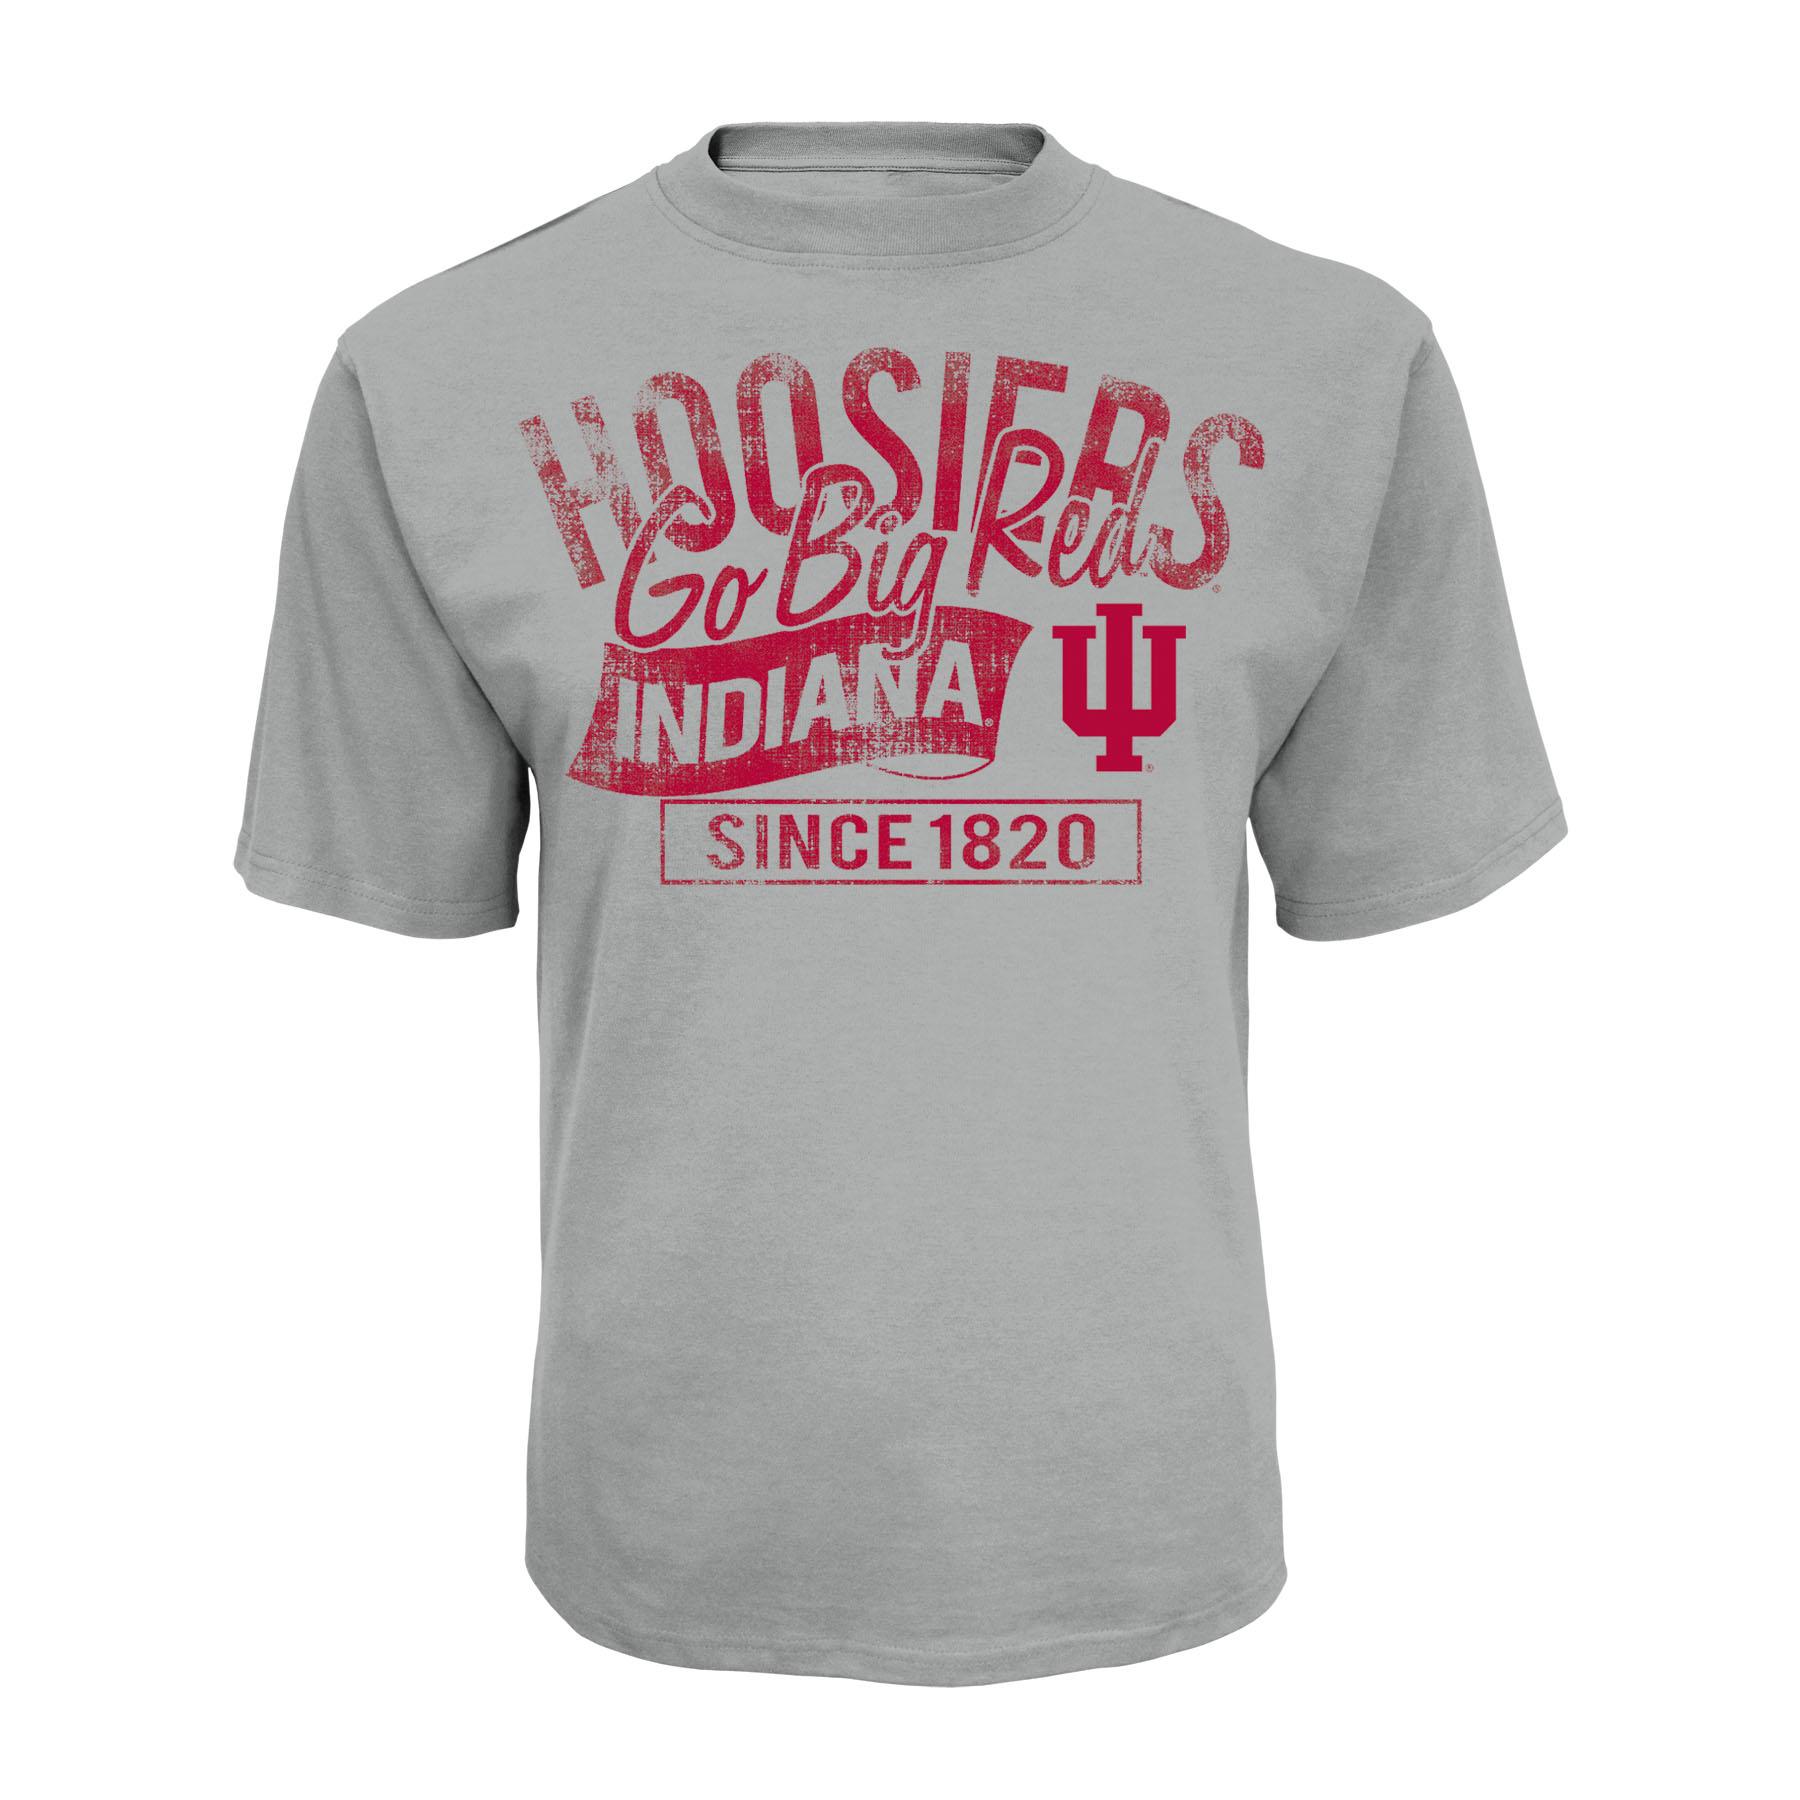 NCAA Men's Distressed Graphic T-Shirt - Indiana Hoosiers